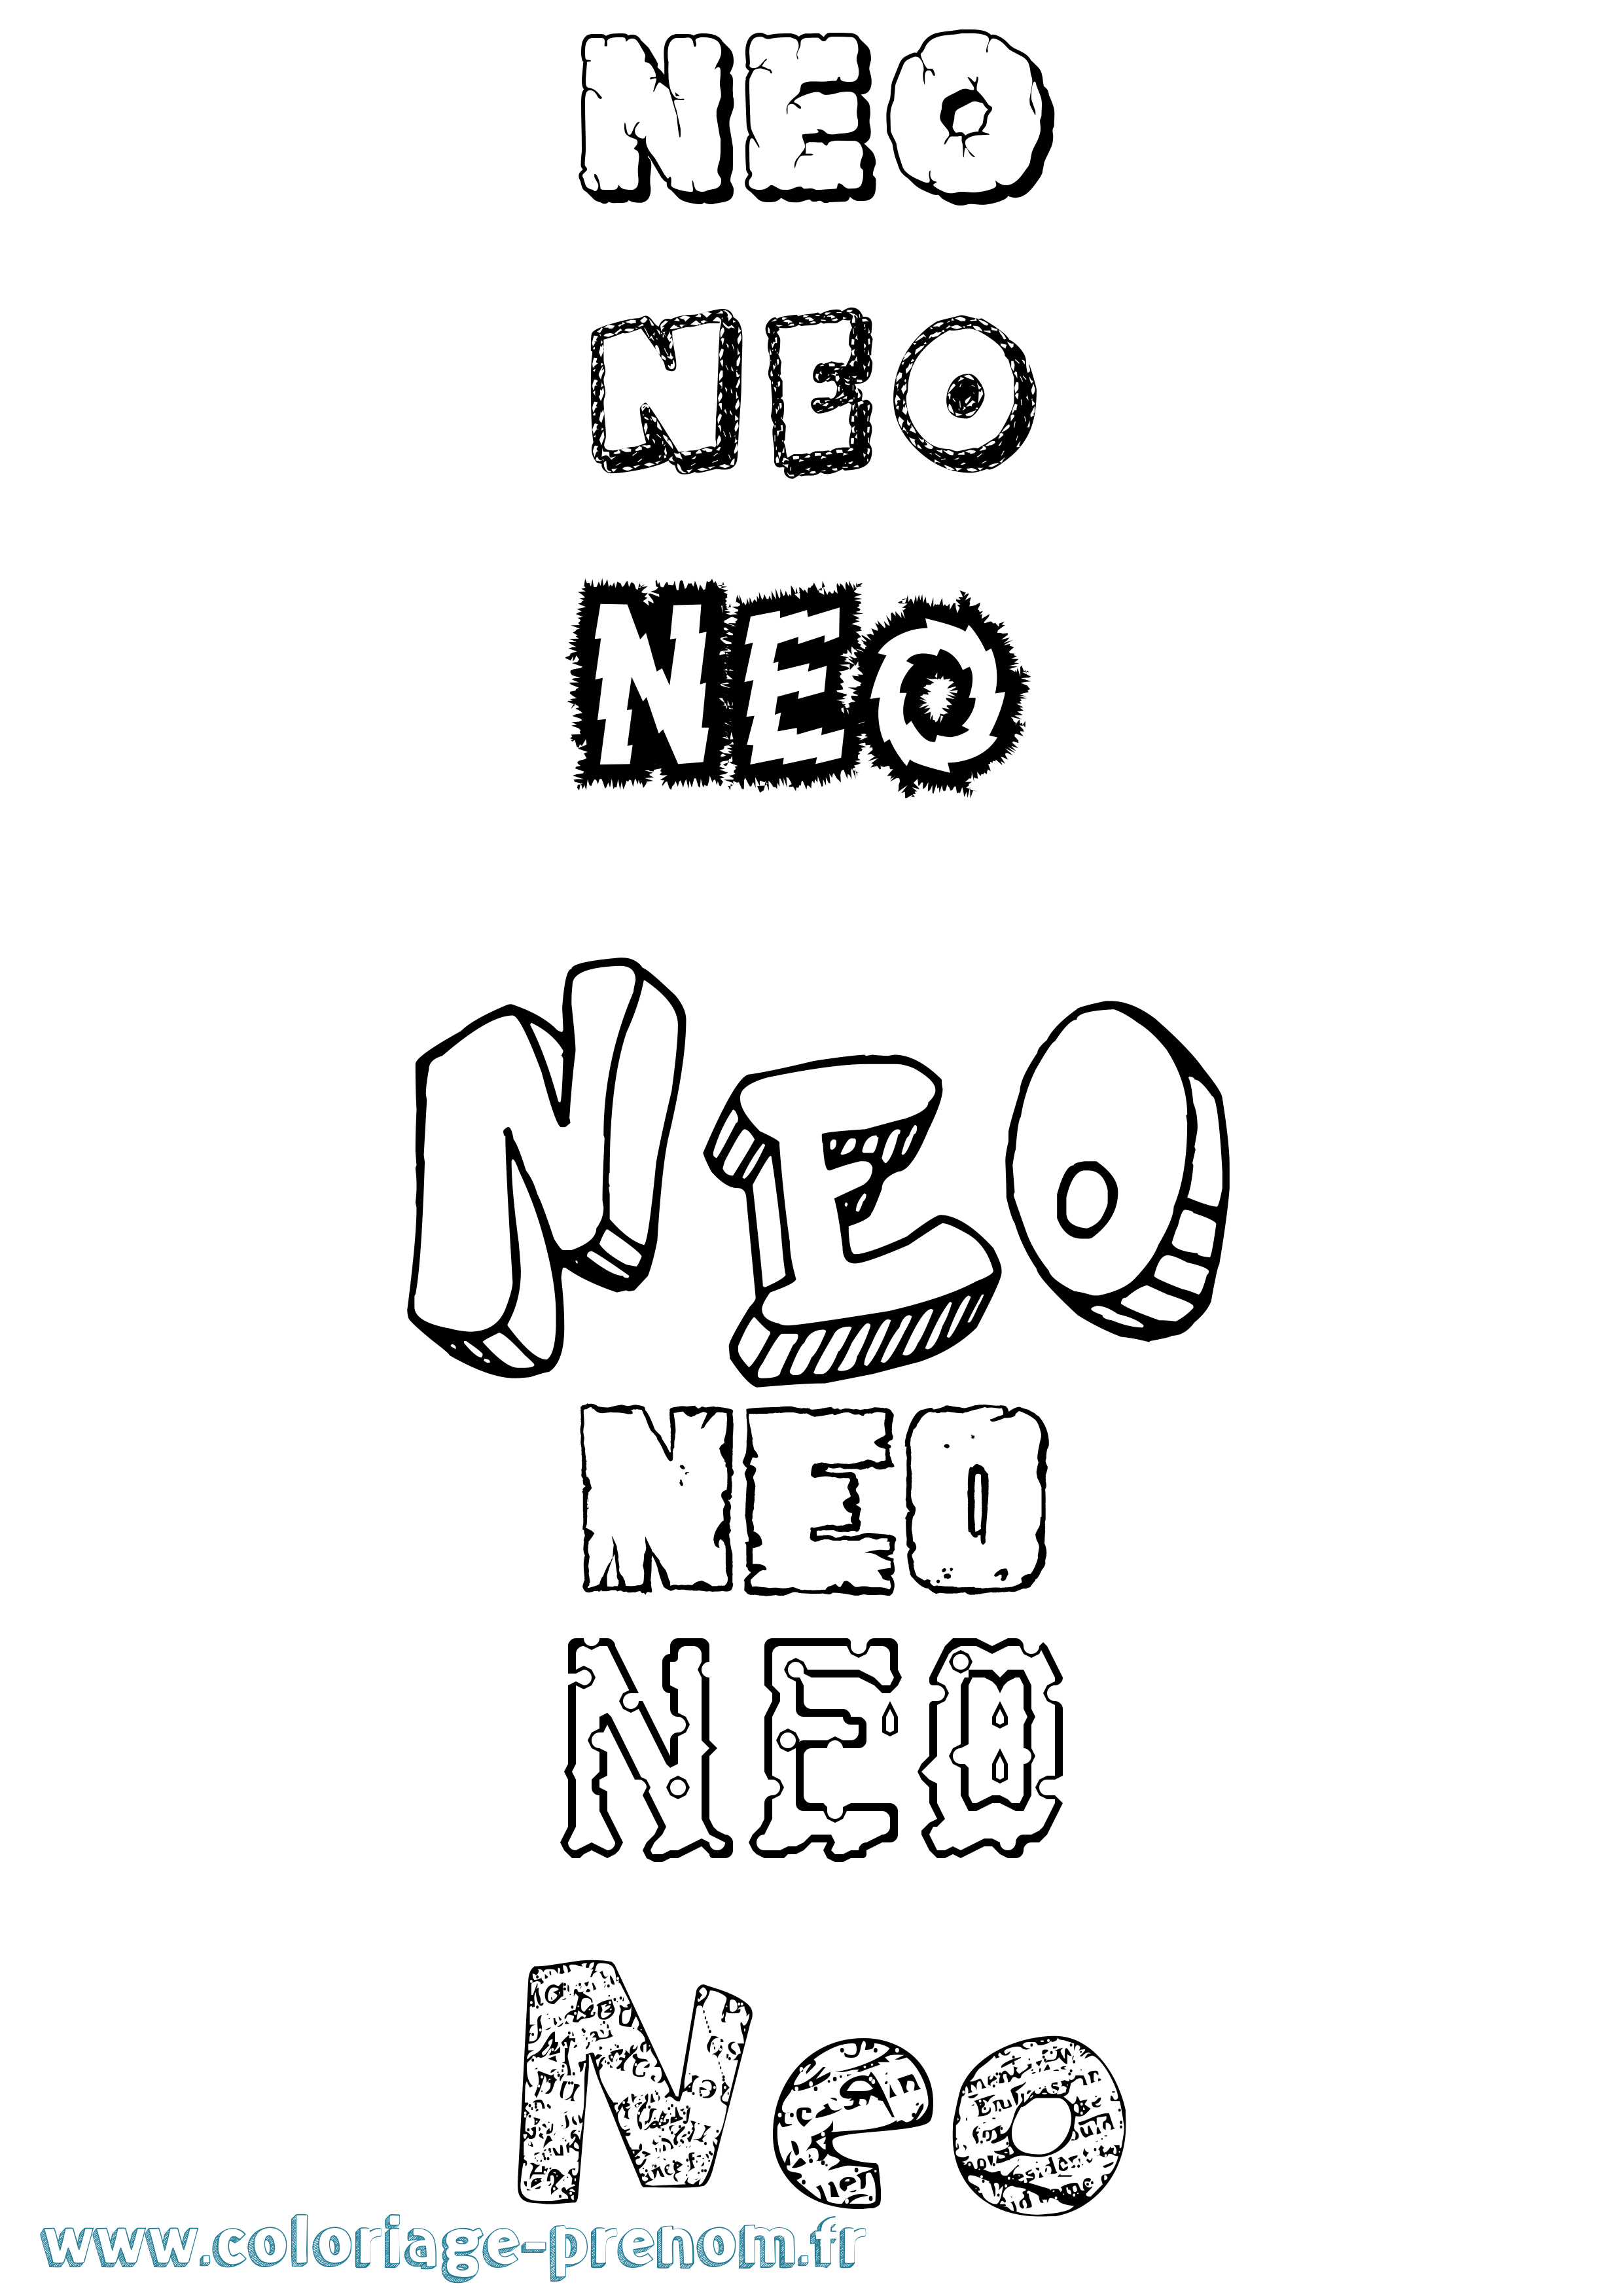 Coloriage prénom Neo